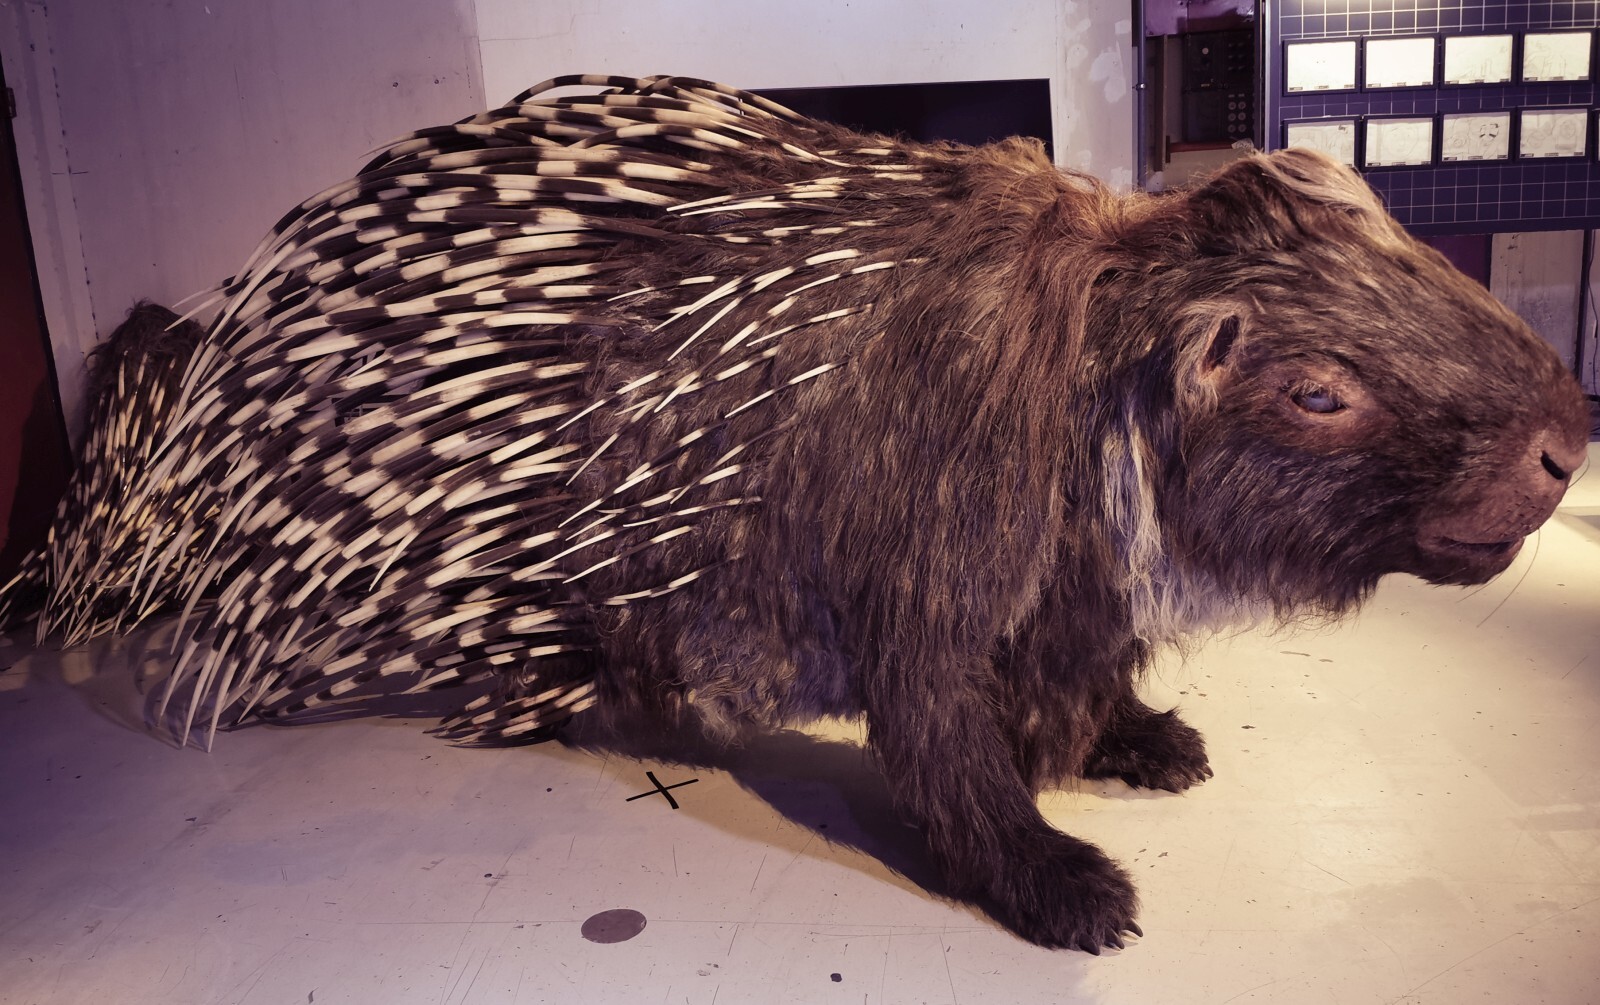 Poor Porcupine has a bit of a hangover. 